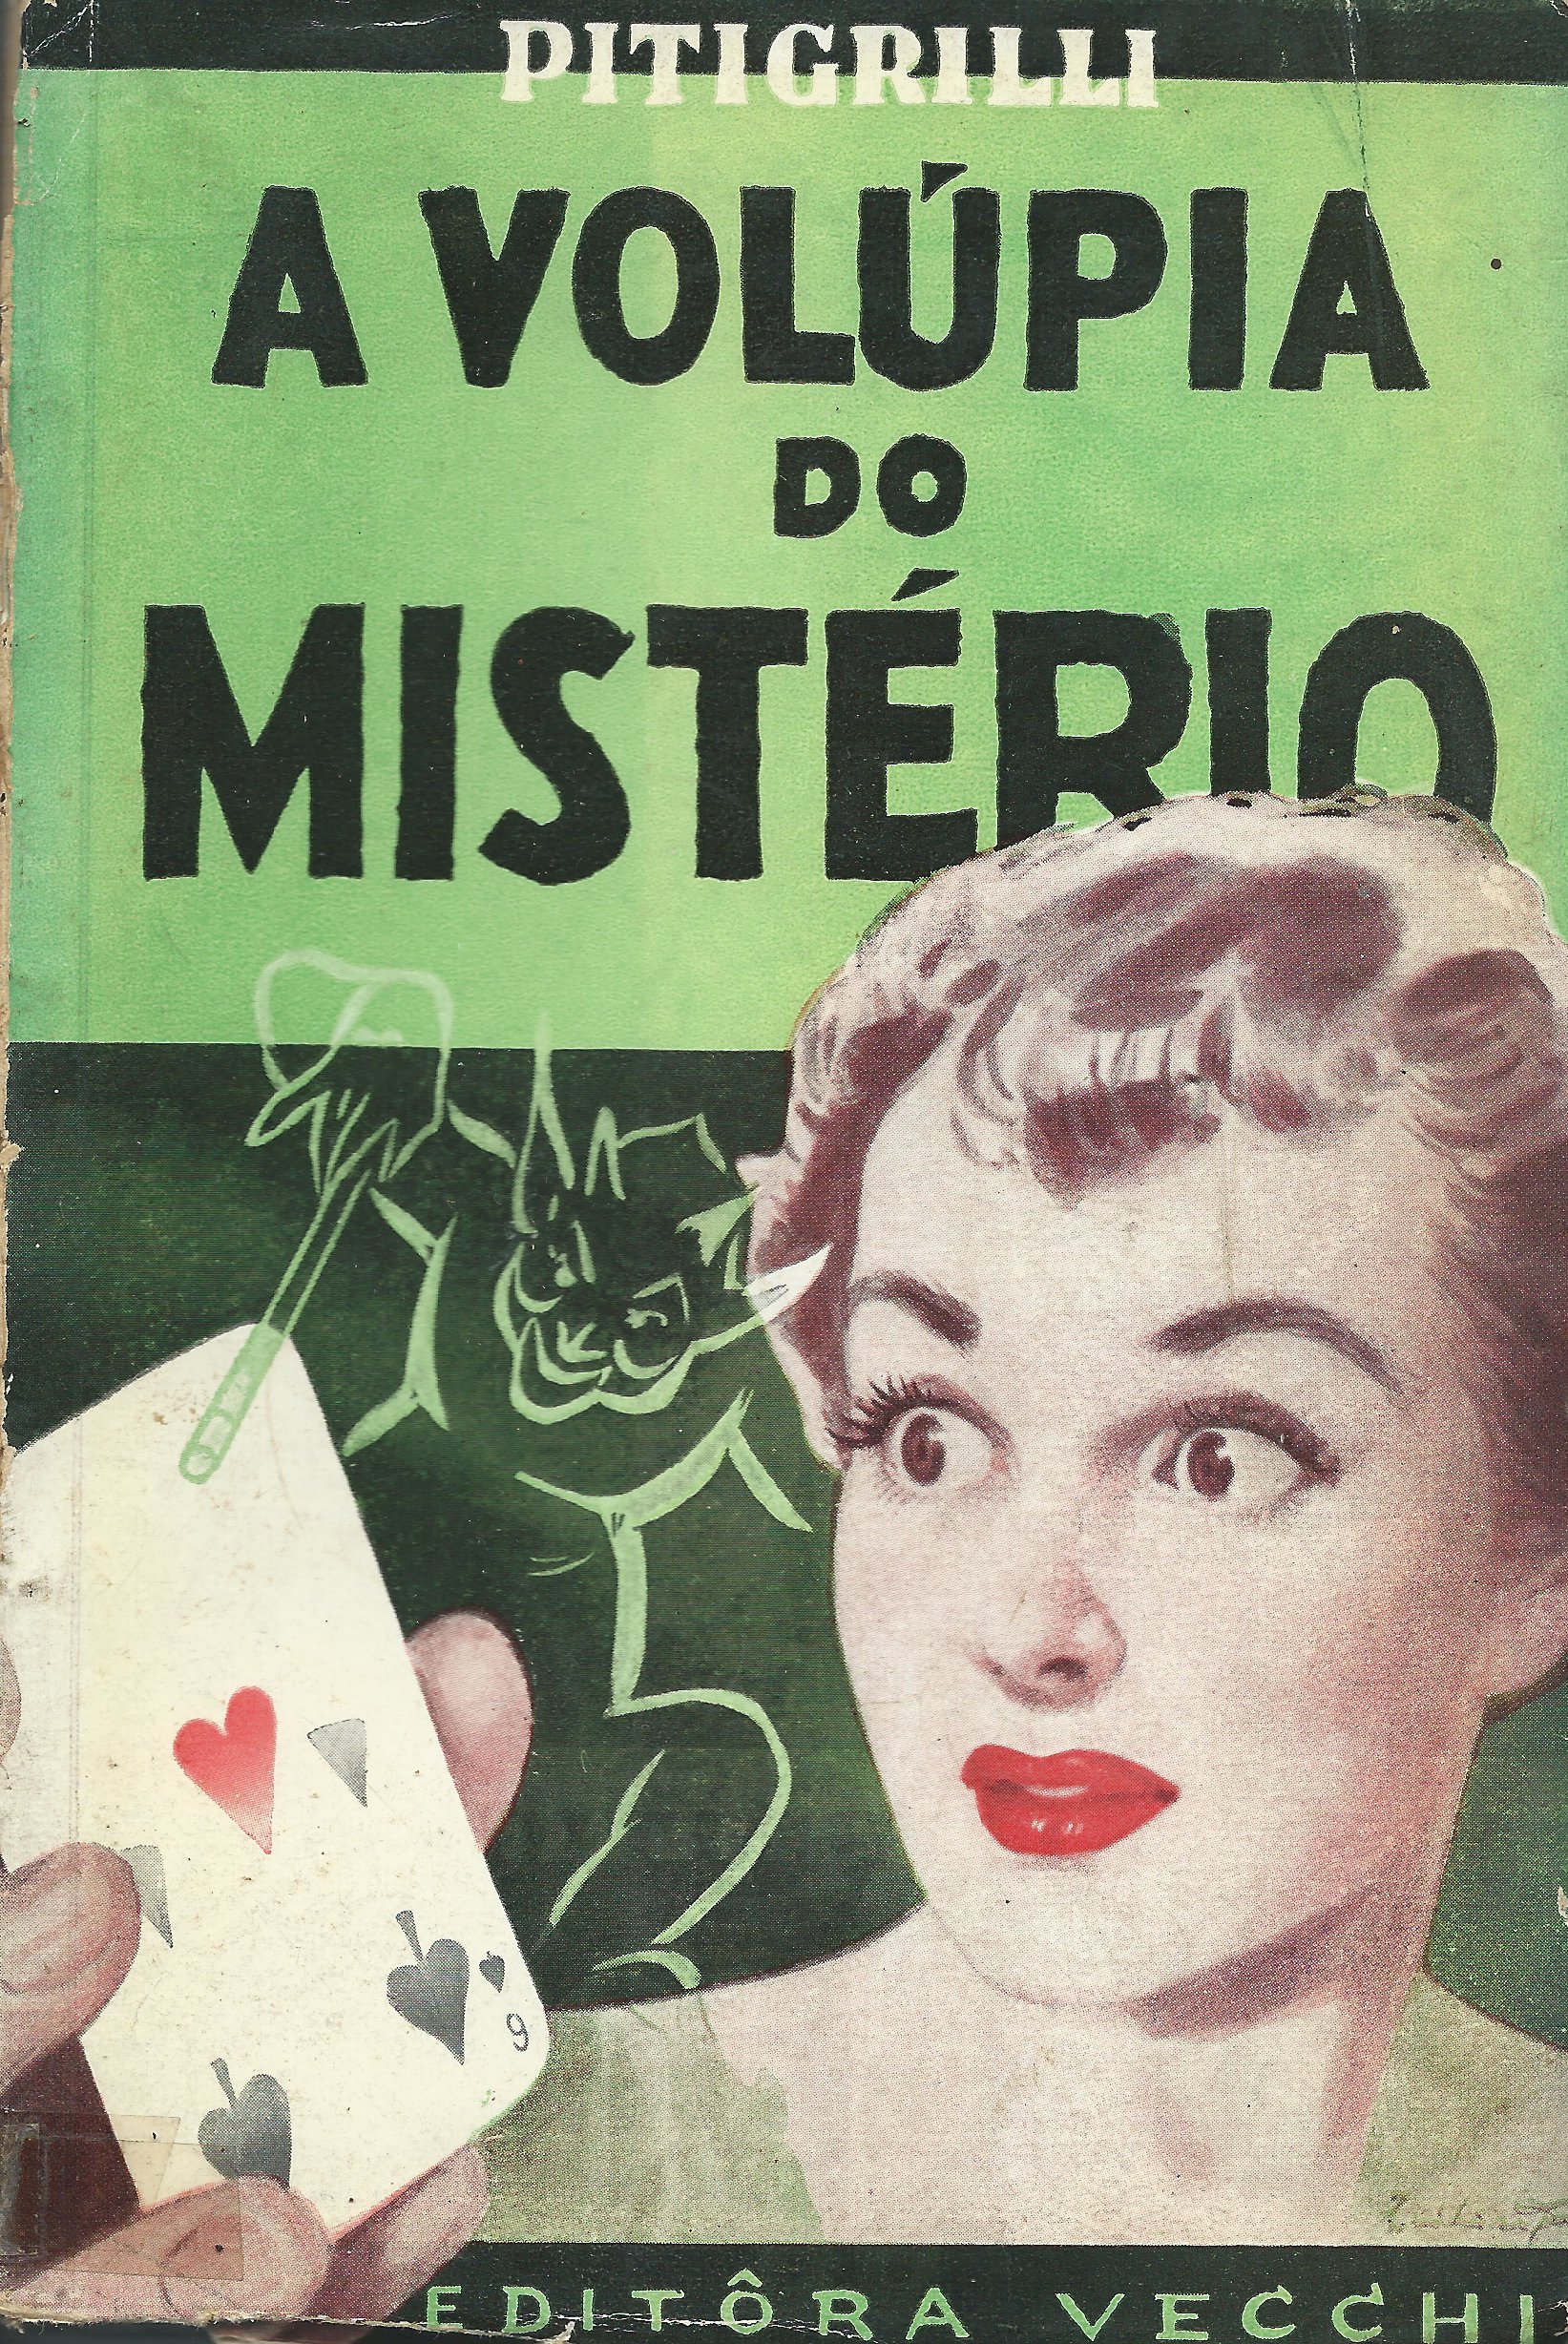 https://www.literaturabrasileira.ufsc.br/_images/obras/a_volupia_do_misterio_ok.jpg